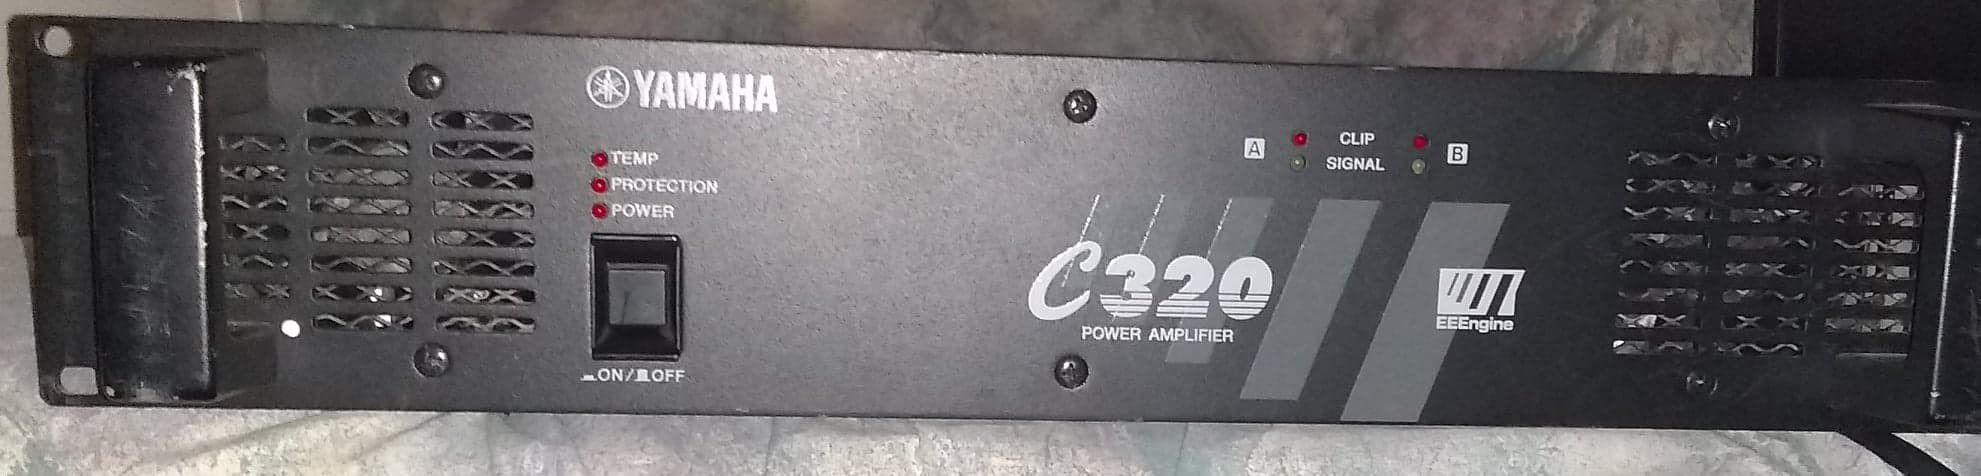 Yamaha C320 400wt amplifier